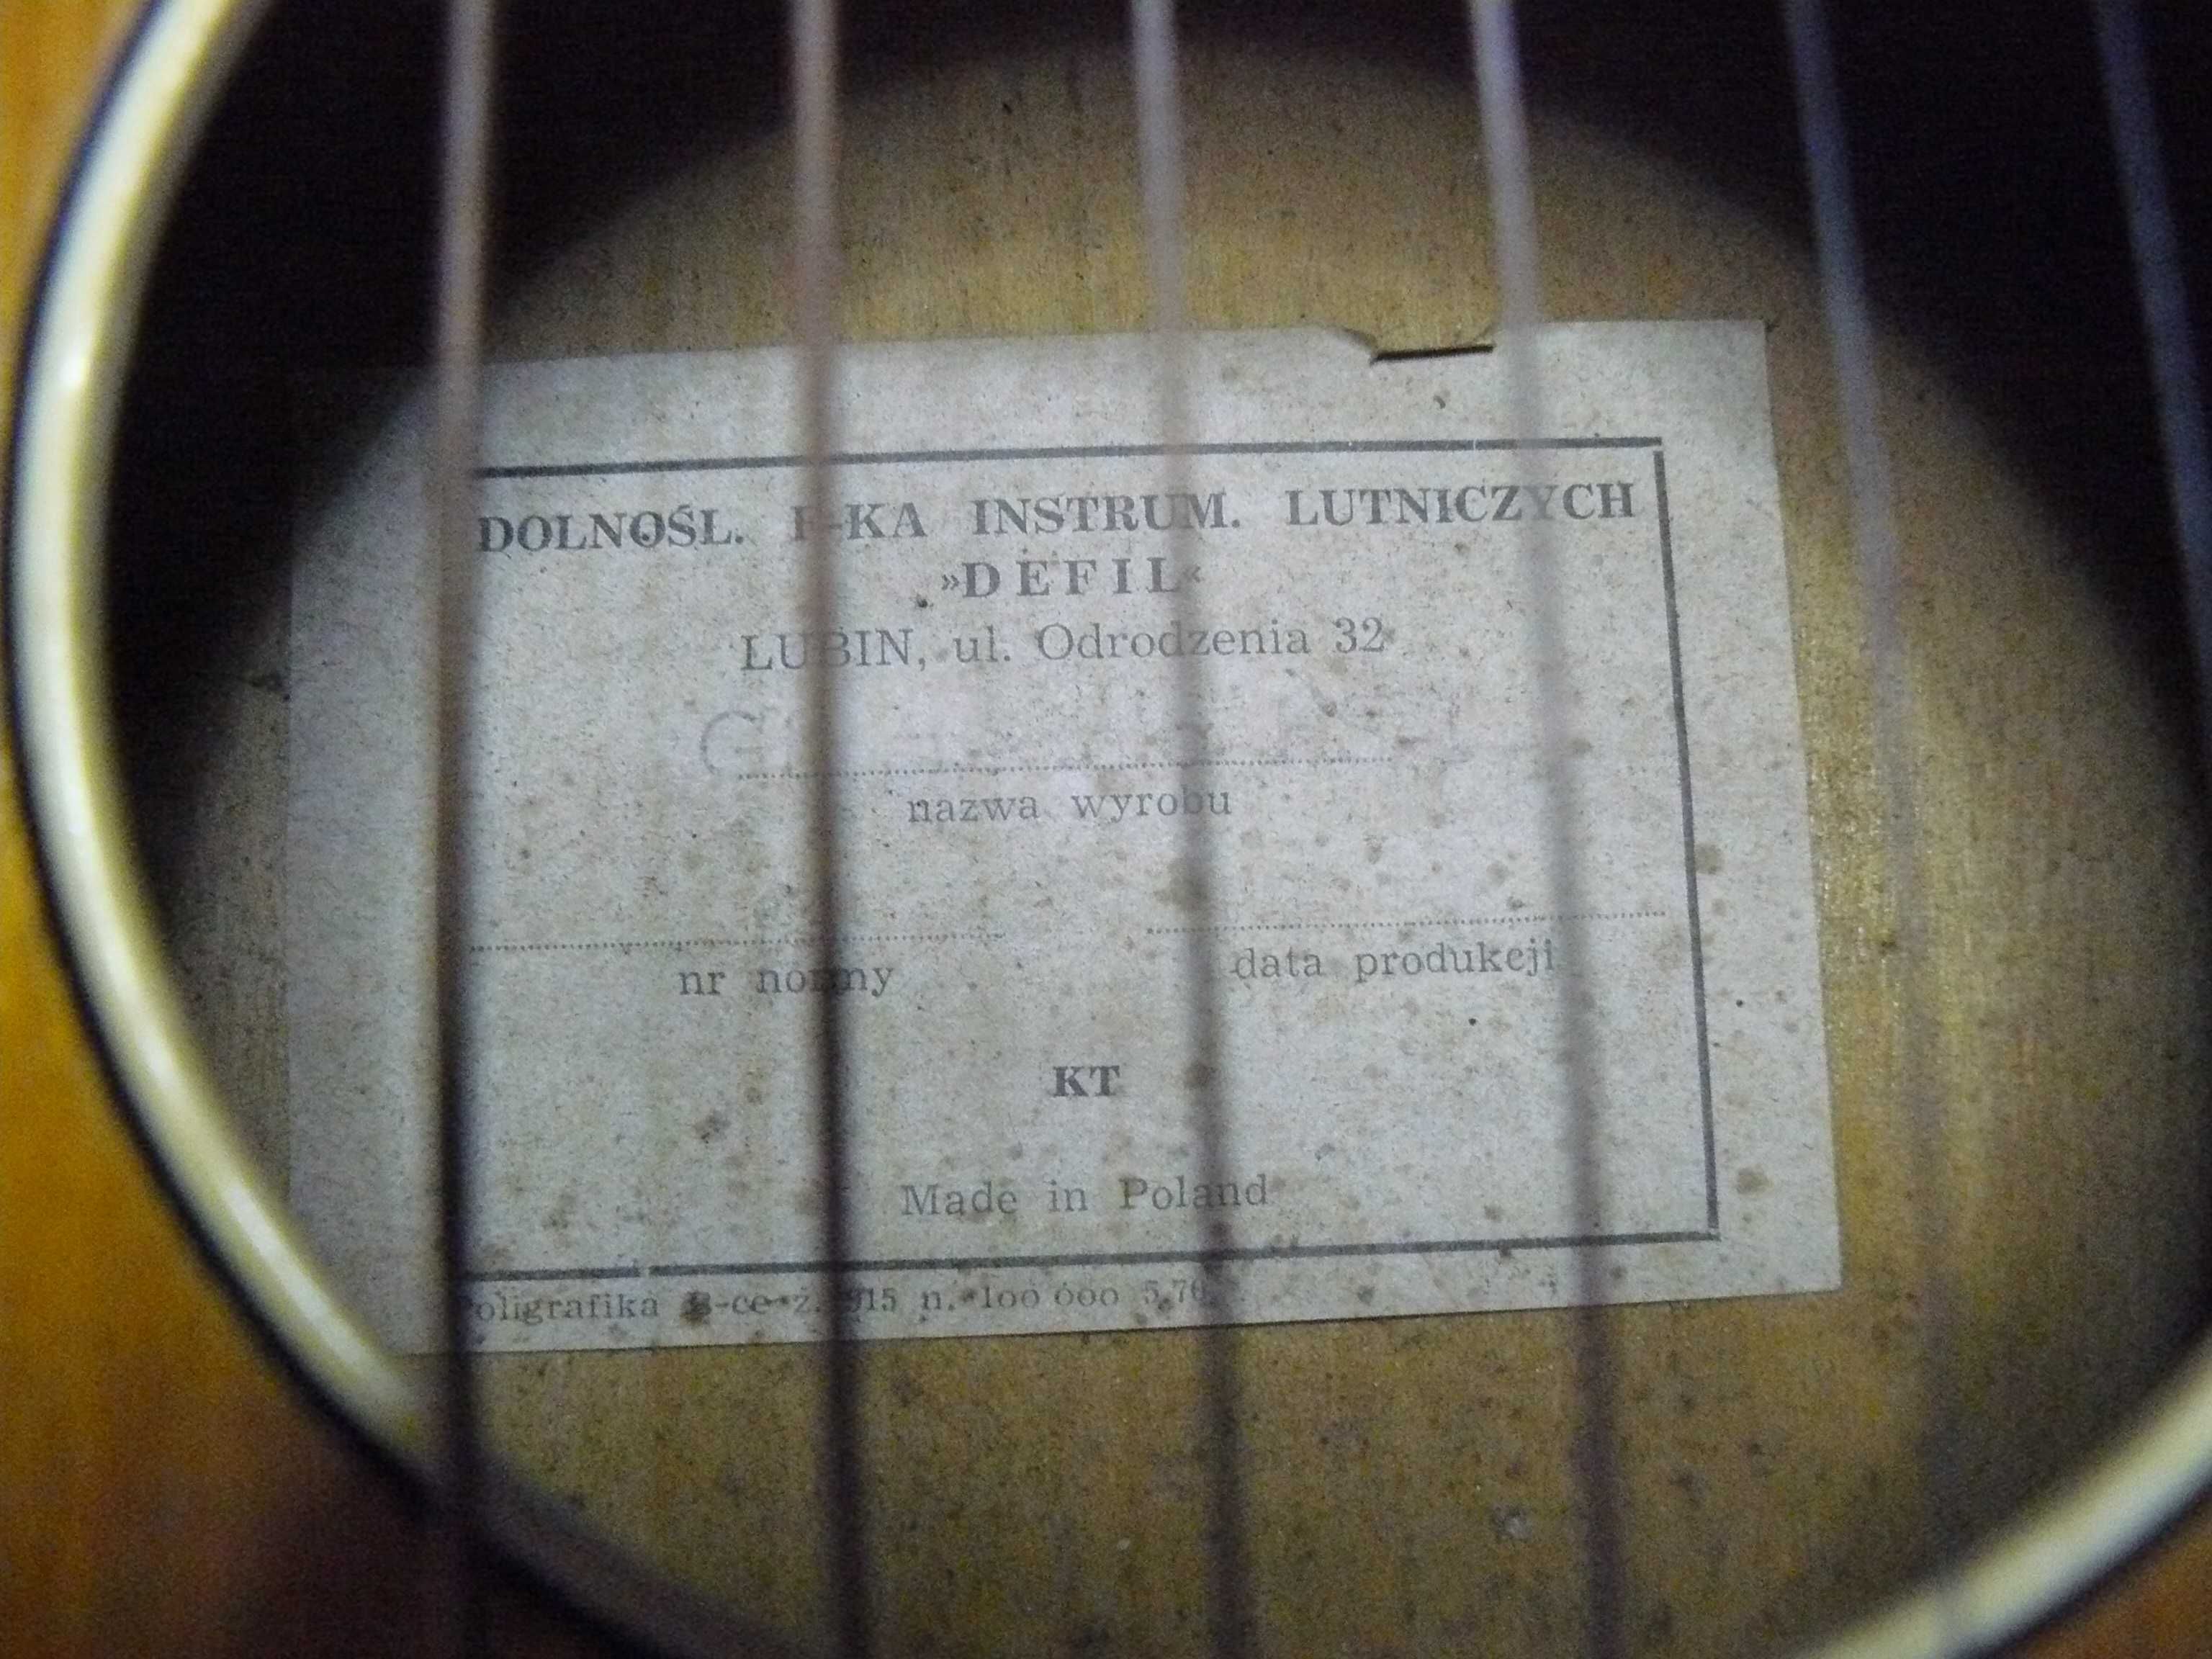 Gitara klasyk F-ka instr. Lutniczych ,,Defil,, Lubin 1973r. 51 lat